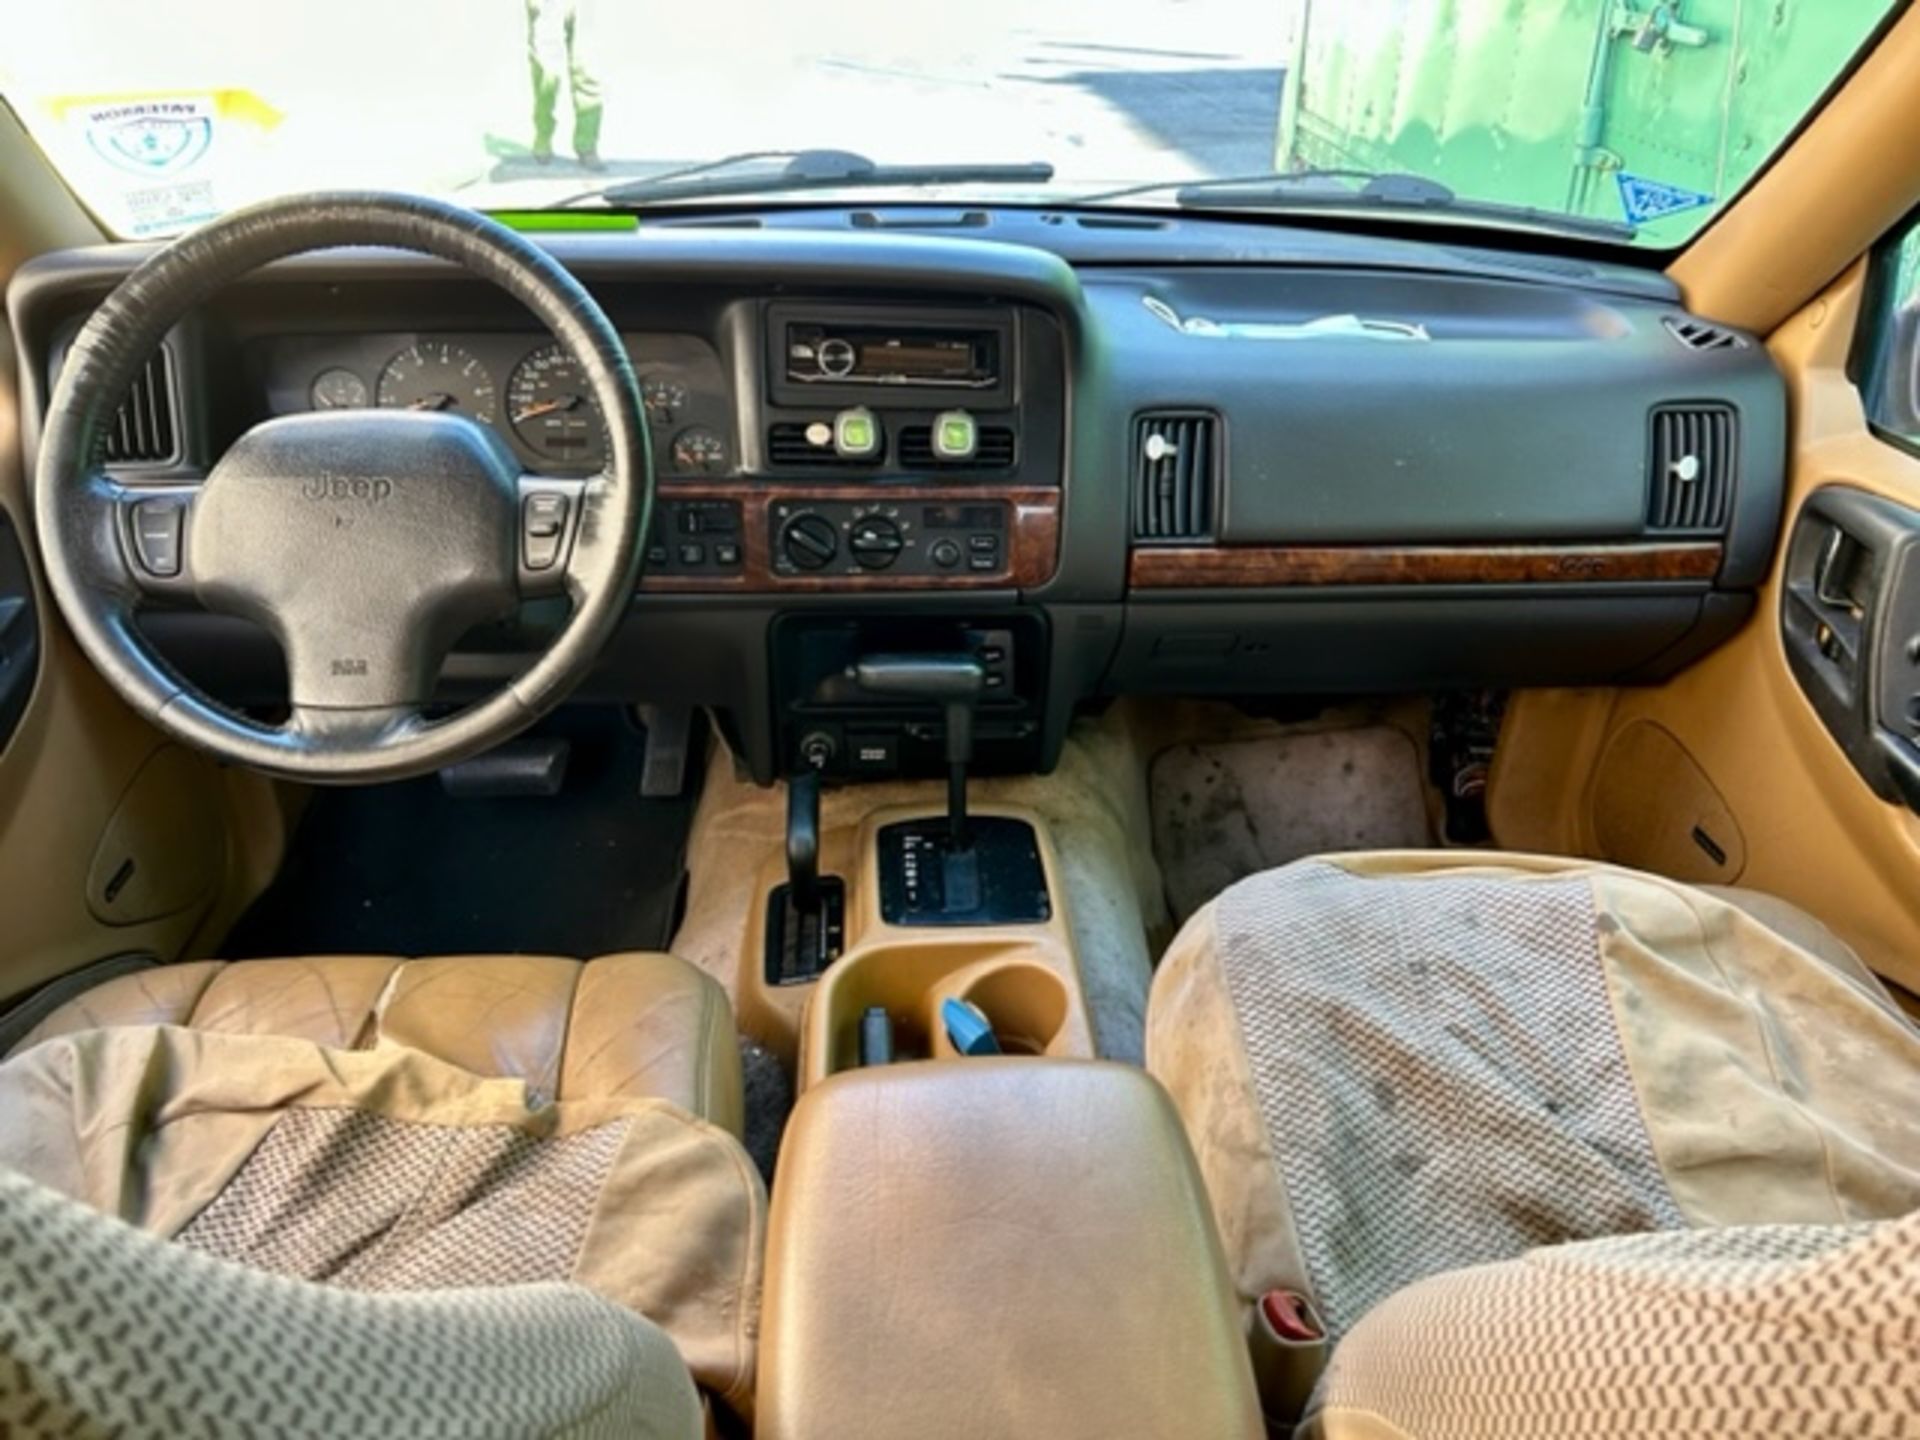 1995 Jeep Grand Cherokee Limited; VIN:1J4E278YOTC129819; Mileage UnKnown; NO KEY - Image 6 of 7